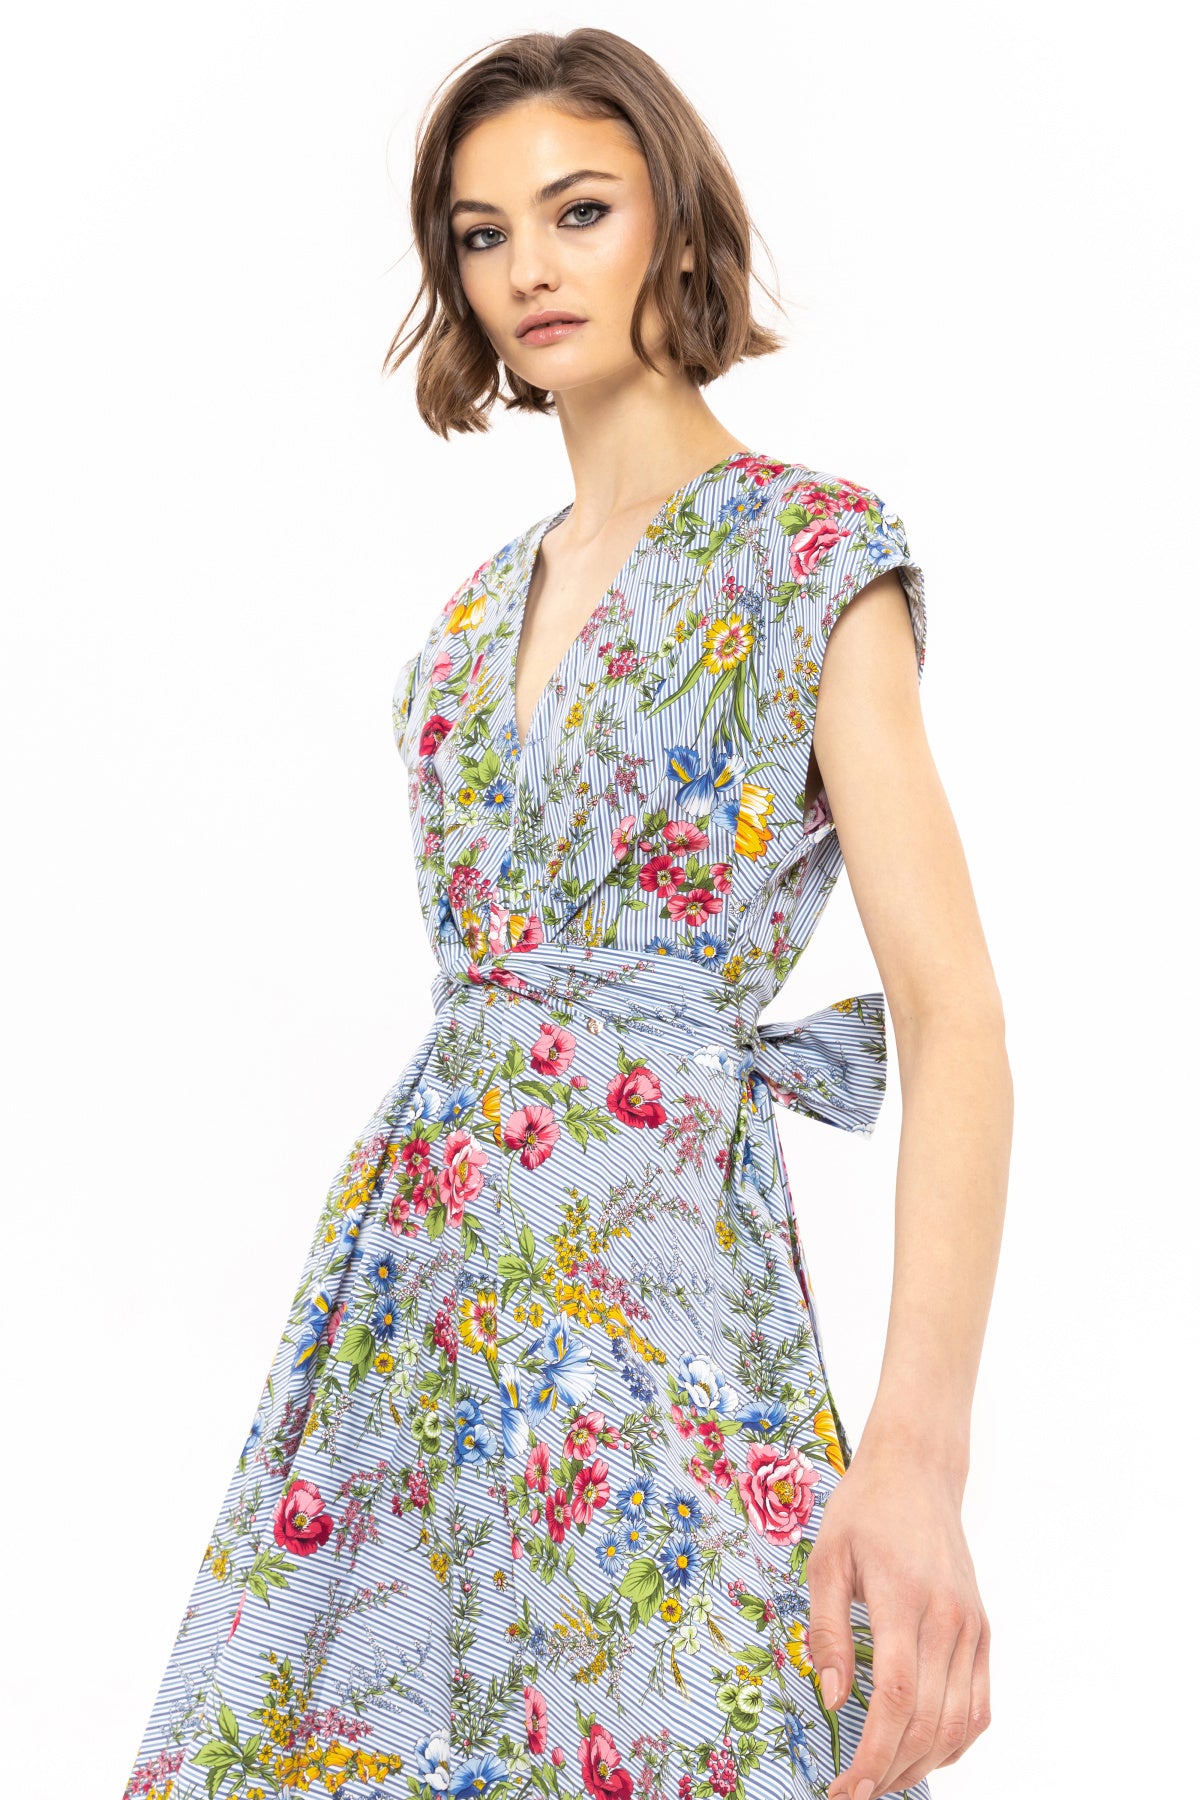 Cotton dress midi dress with flower print.